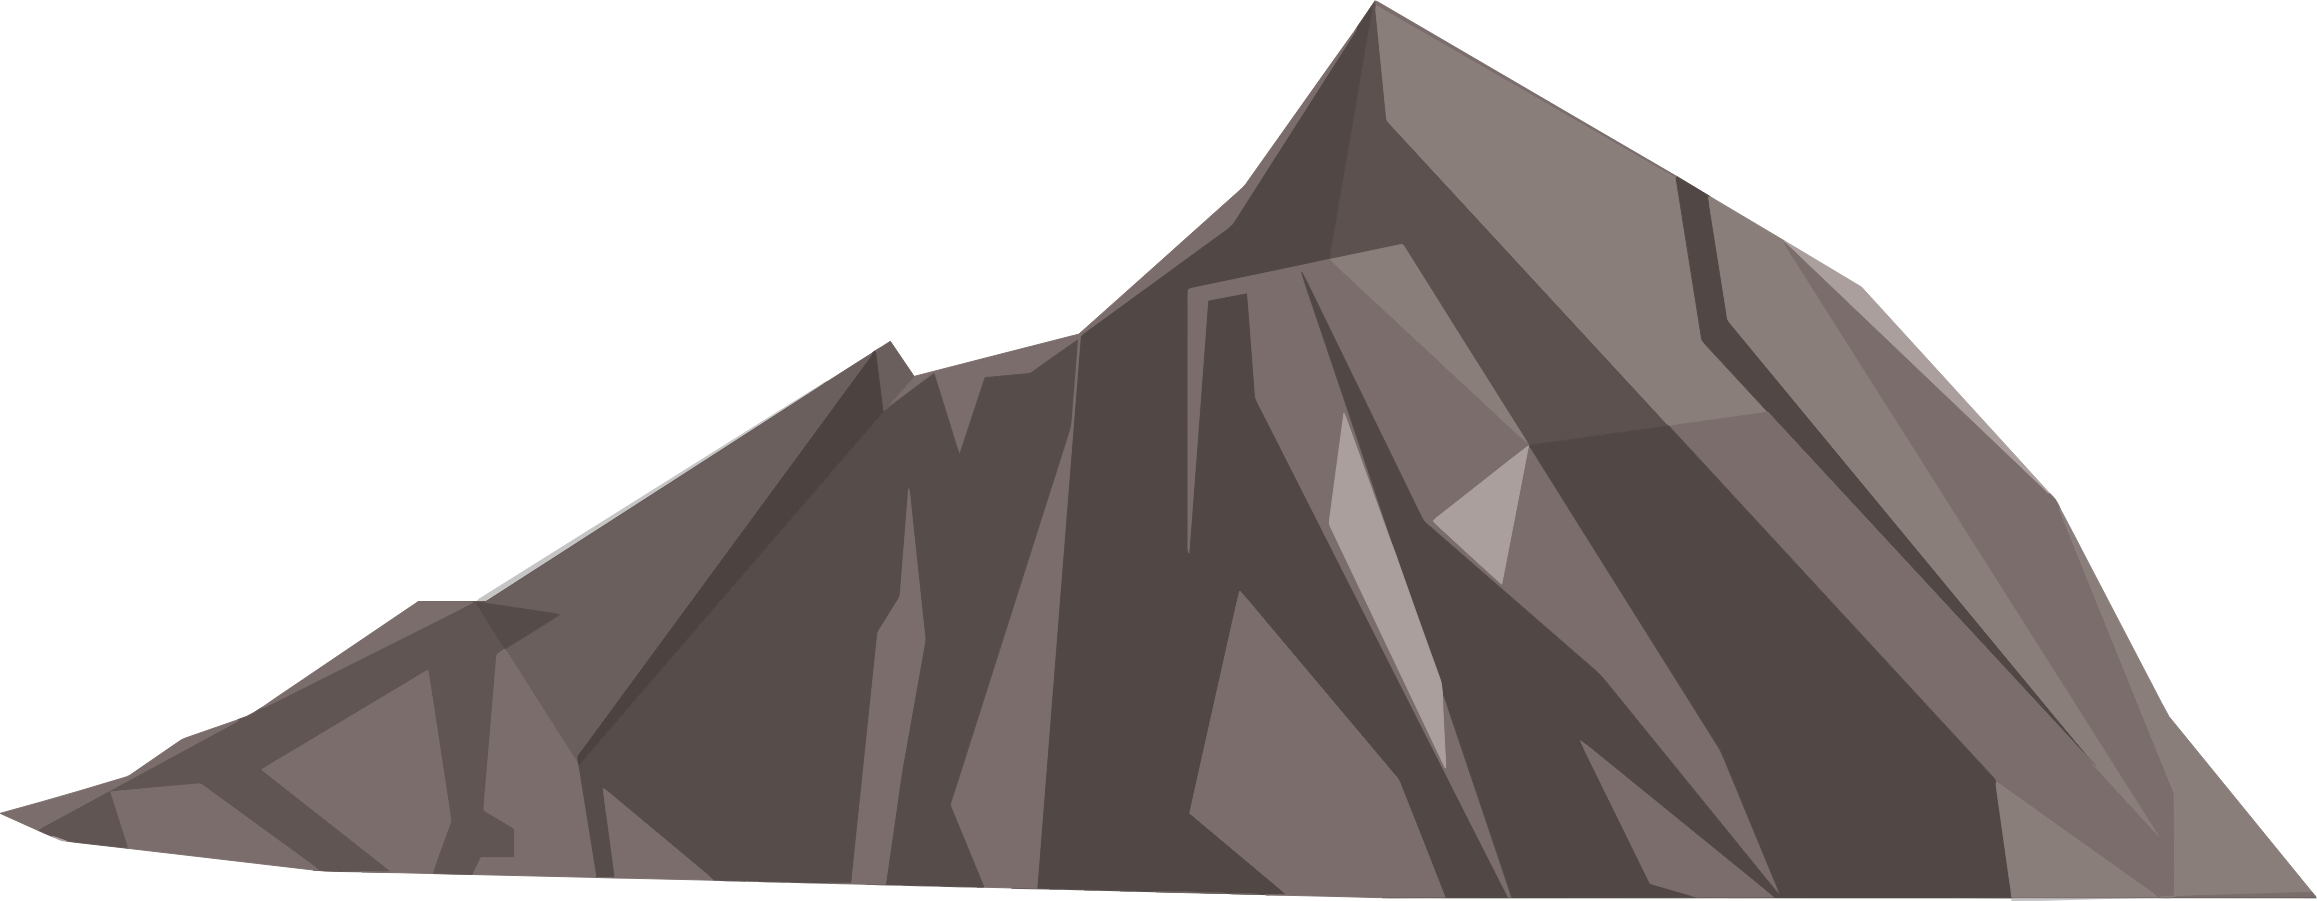 Gunung